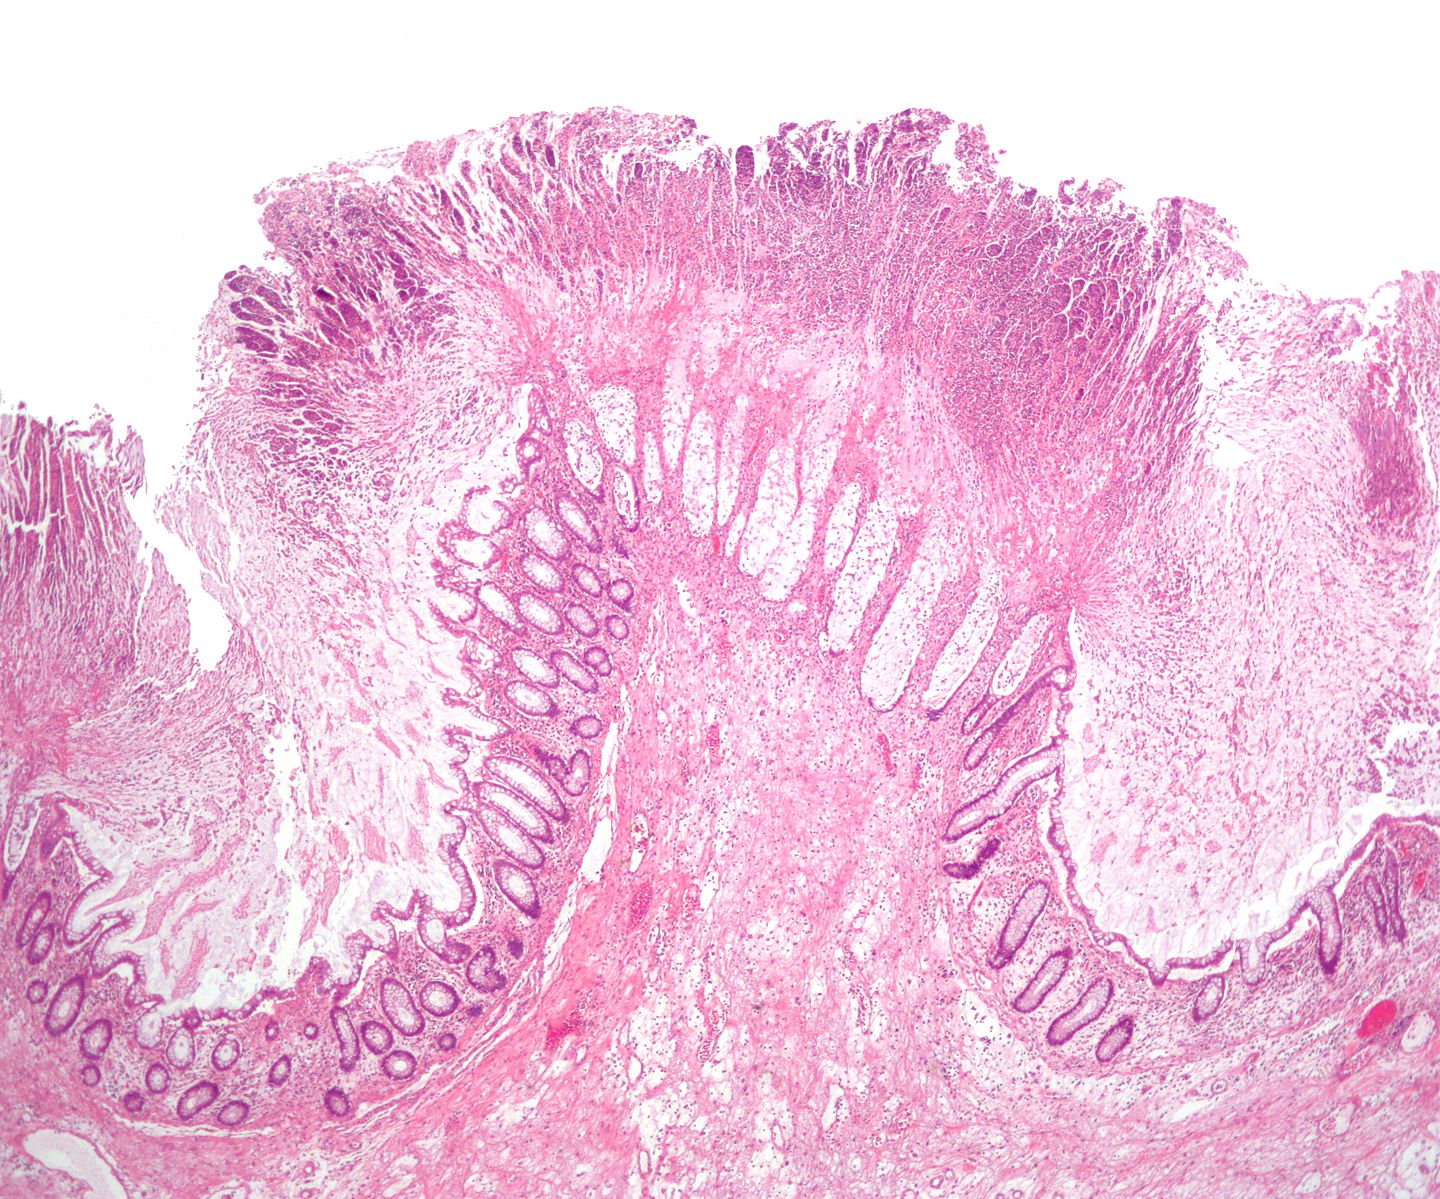 Pseudomembranous colitis. H& E staining showing pseudomembranes in Clostridium colitis [18]